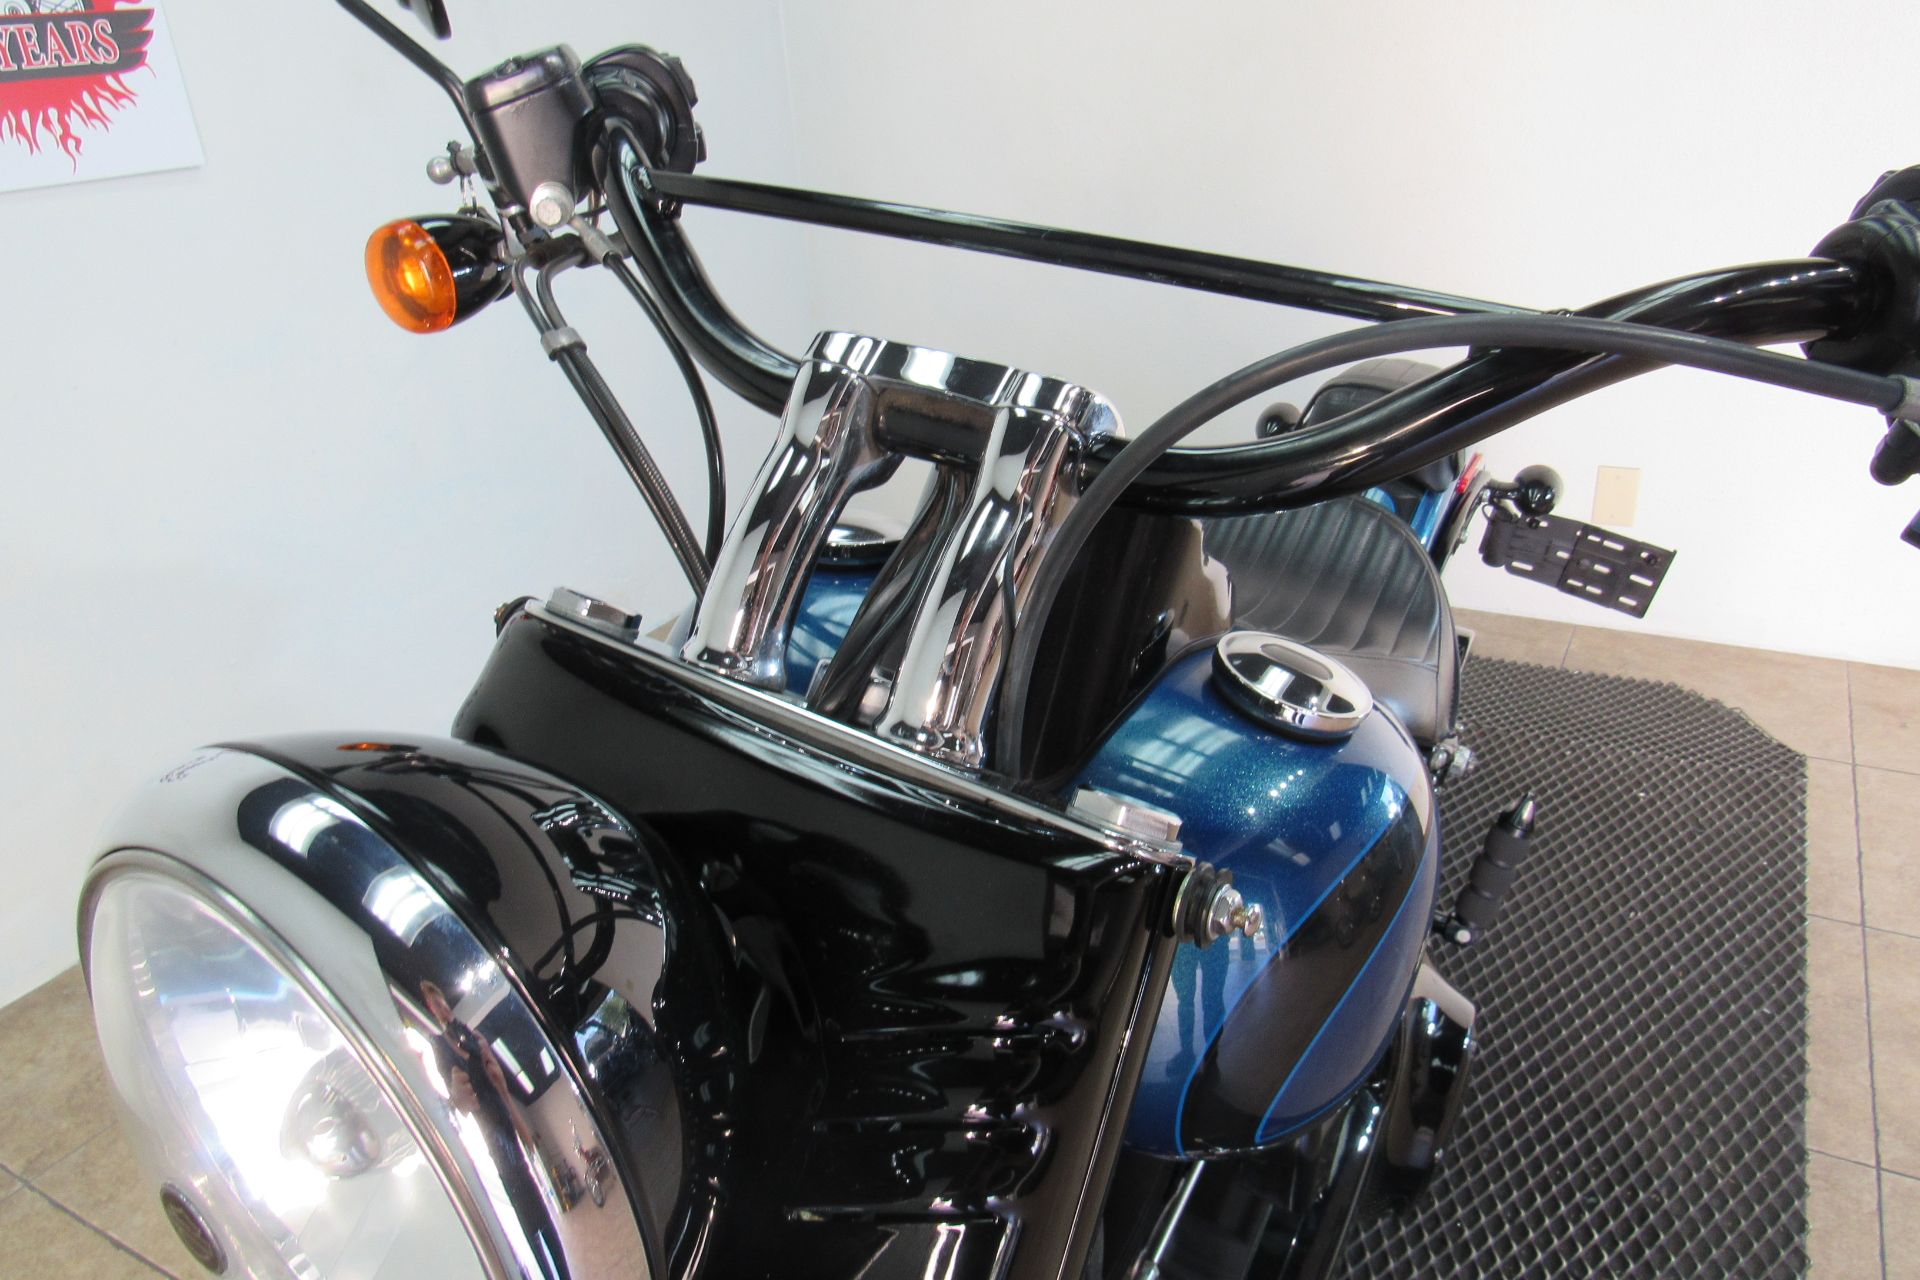 2014 Harley-Davidson Softail Slim® in Temecula, California - Photo 34